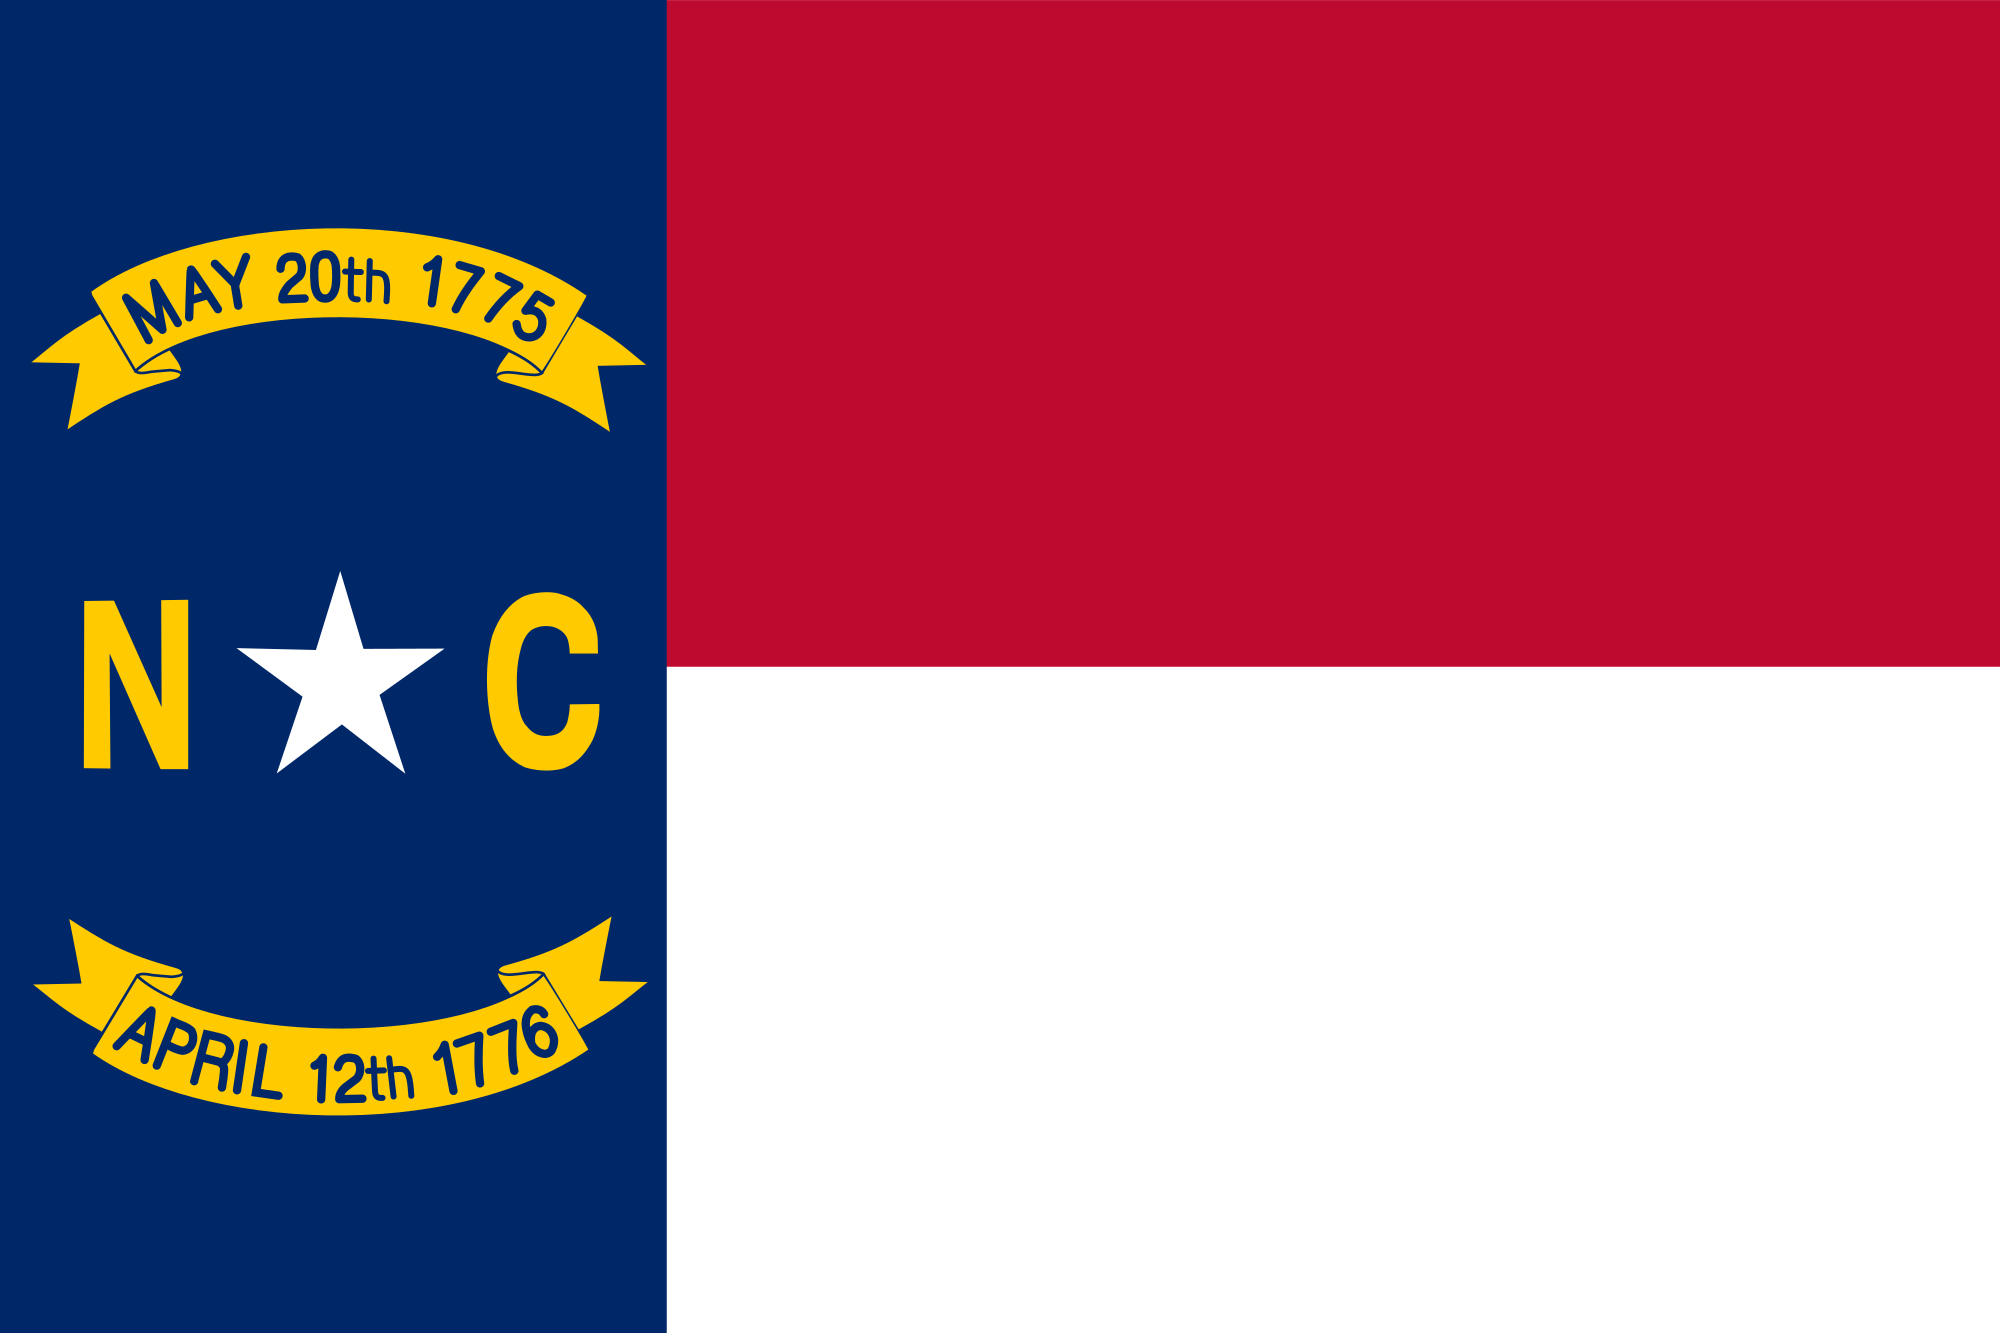 North Carolina State Executive Branch (Governor)